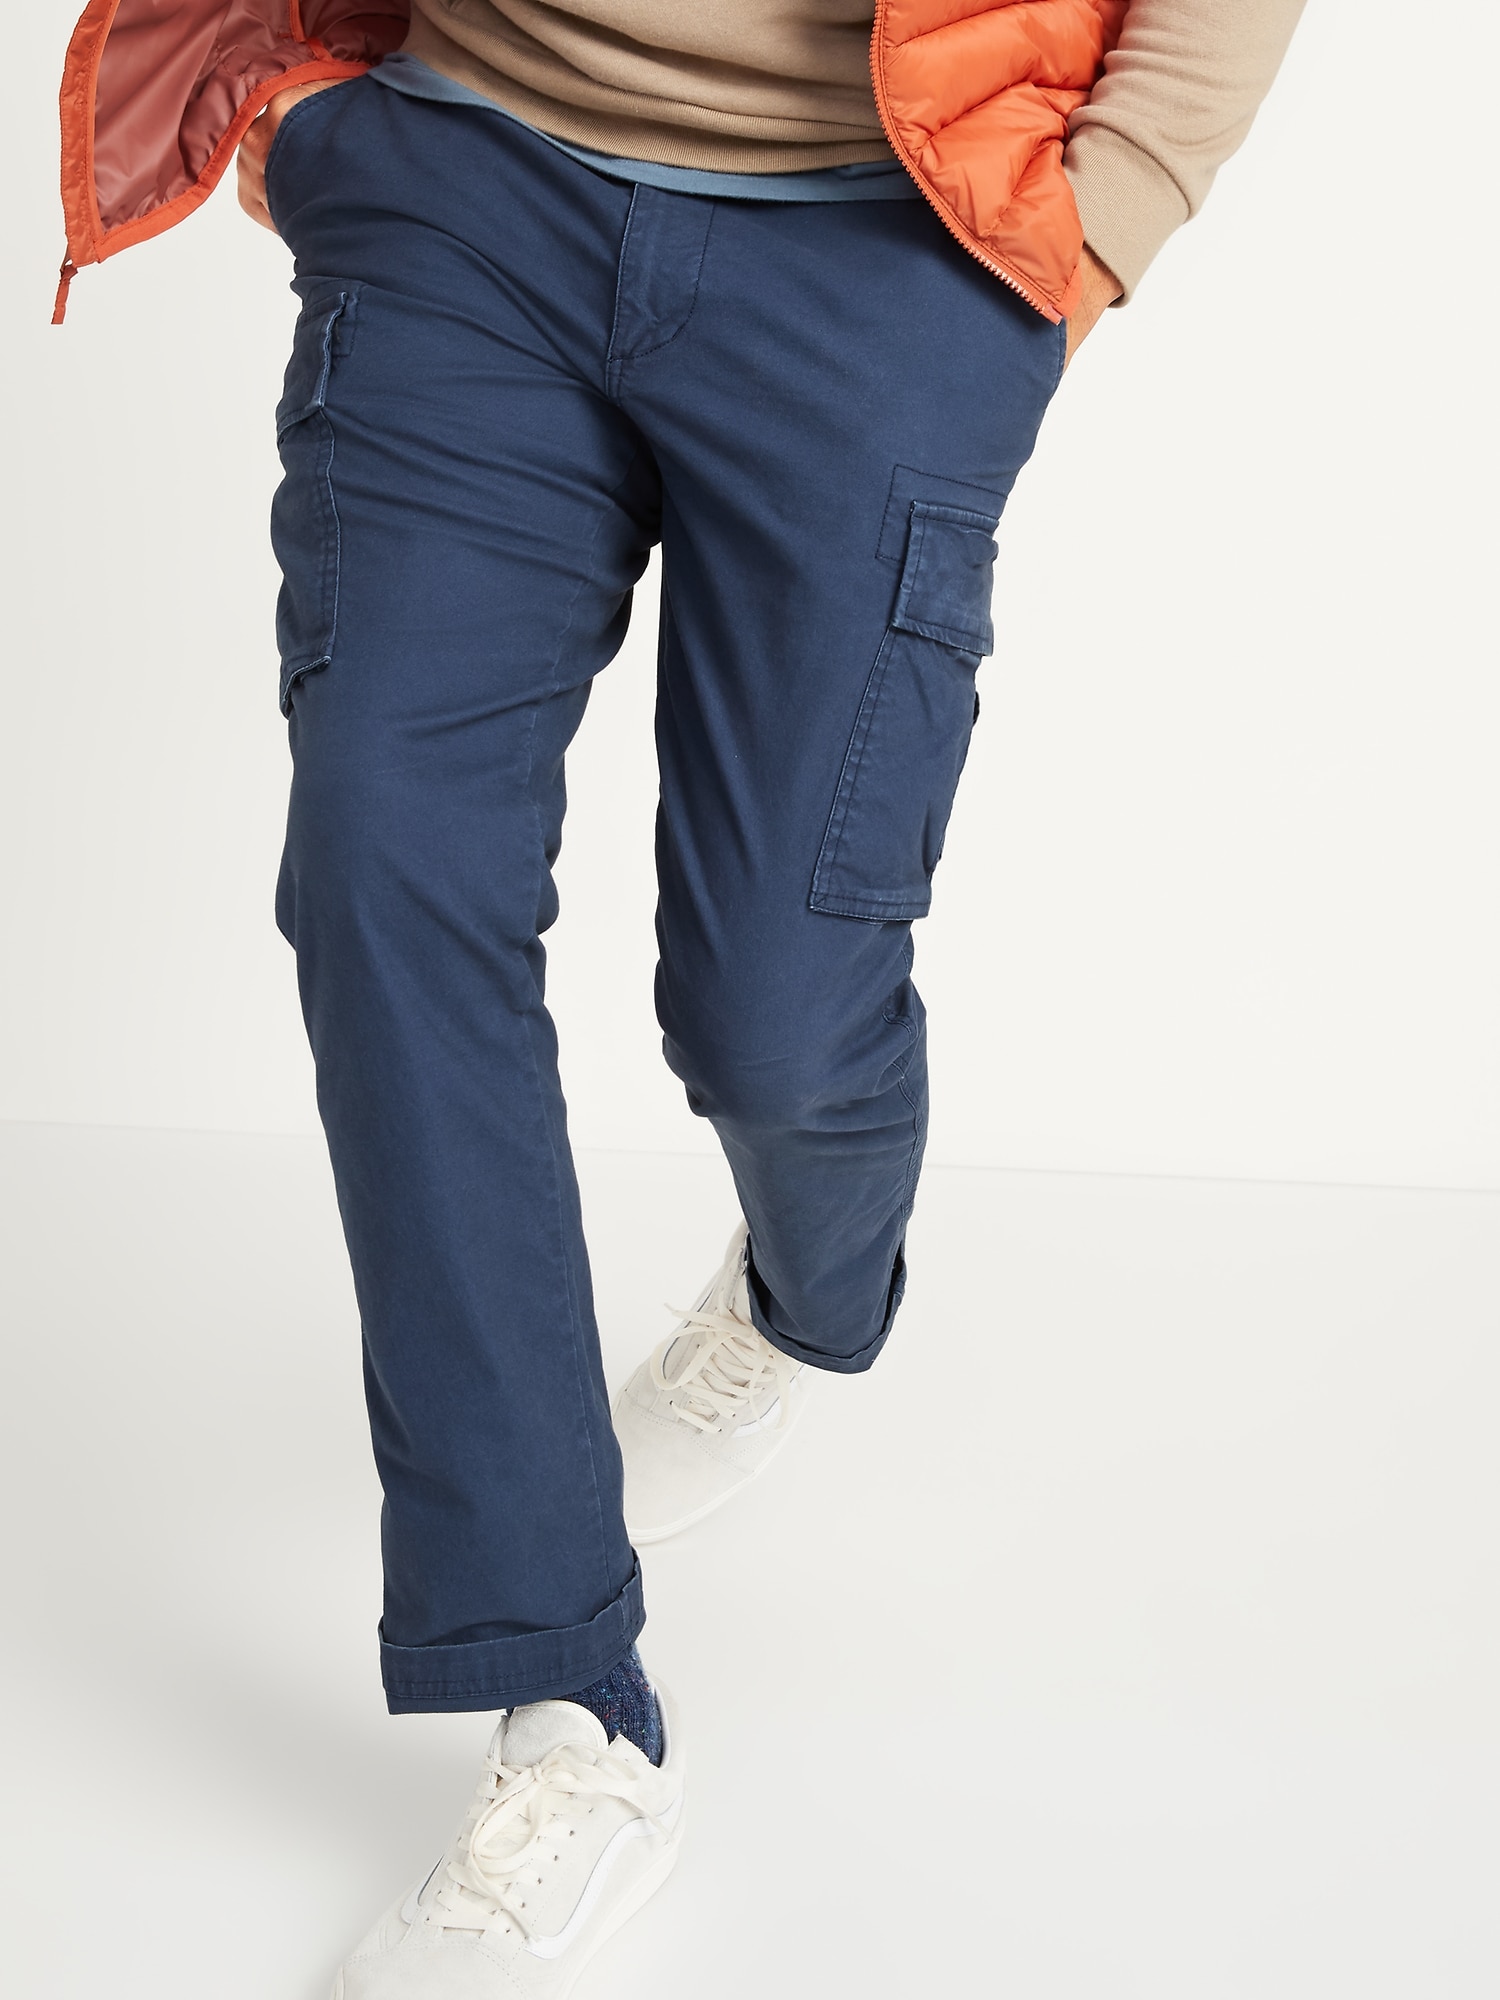 mens navy blue cargo pants